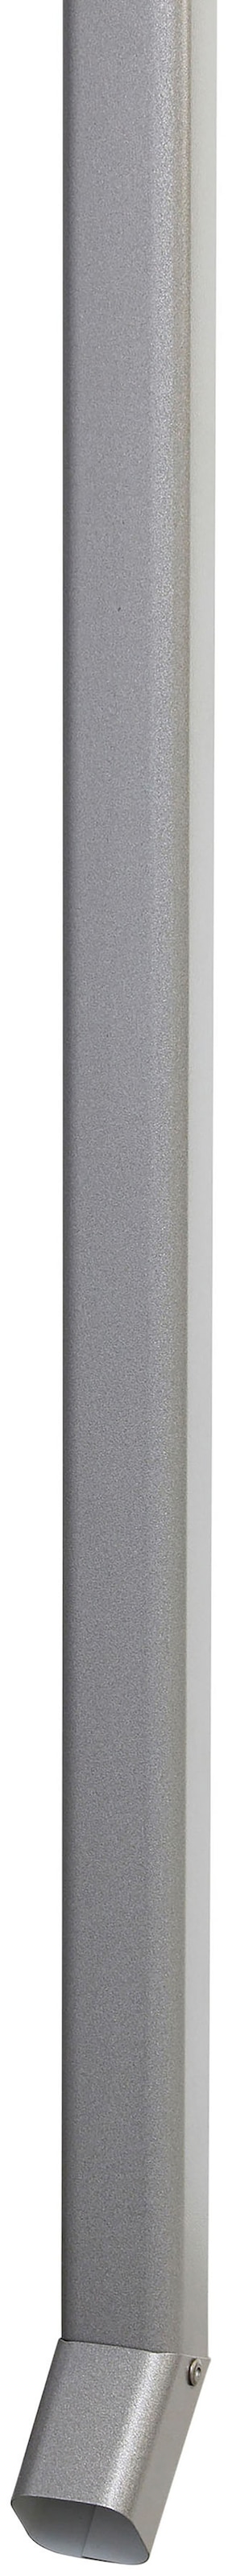 Regenfallrohr, (Set, 2 tlg.), für Gerätehaus HighLine, aus feuerverzinktem Stahl